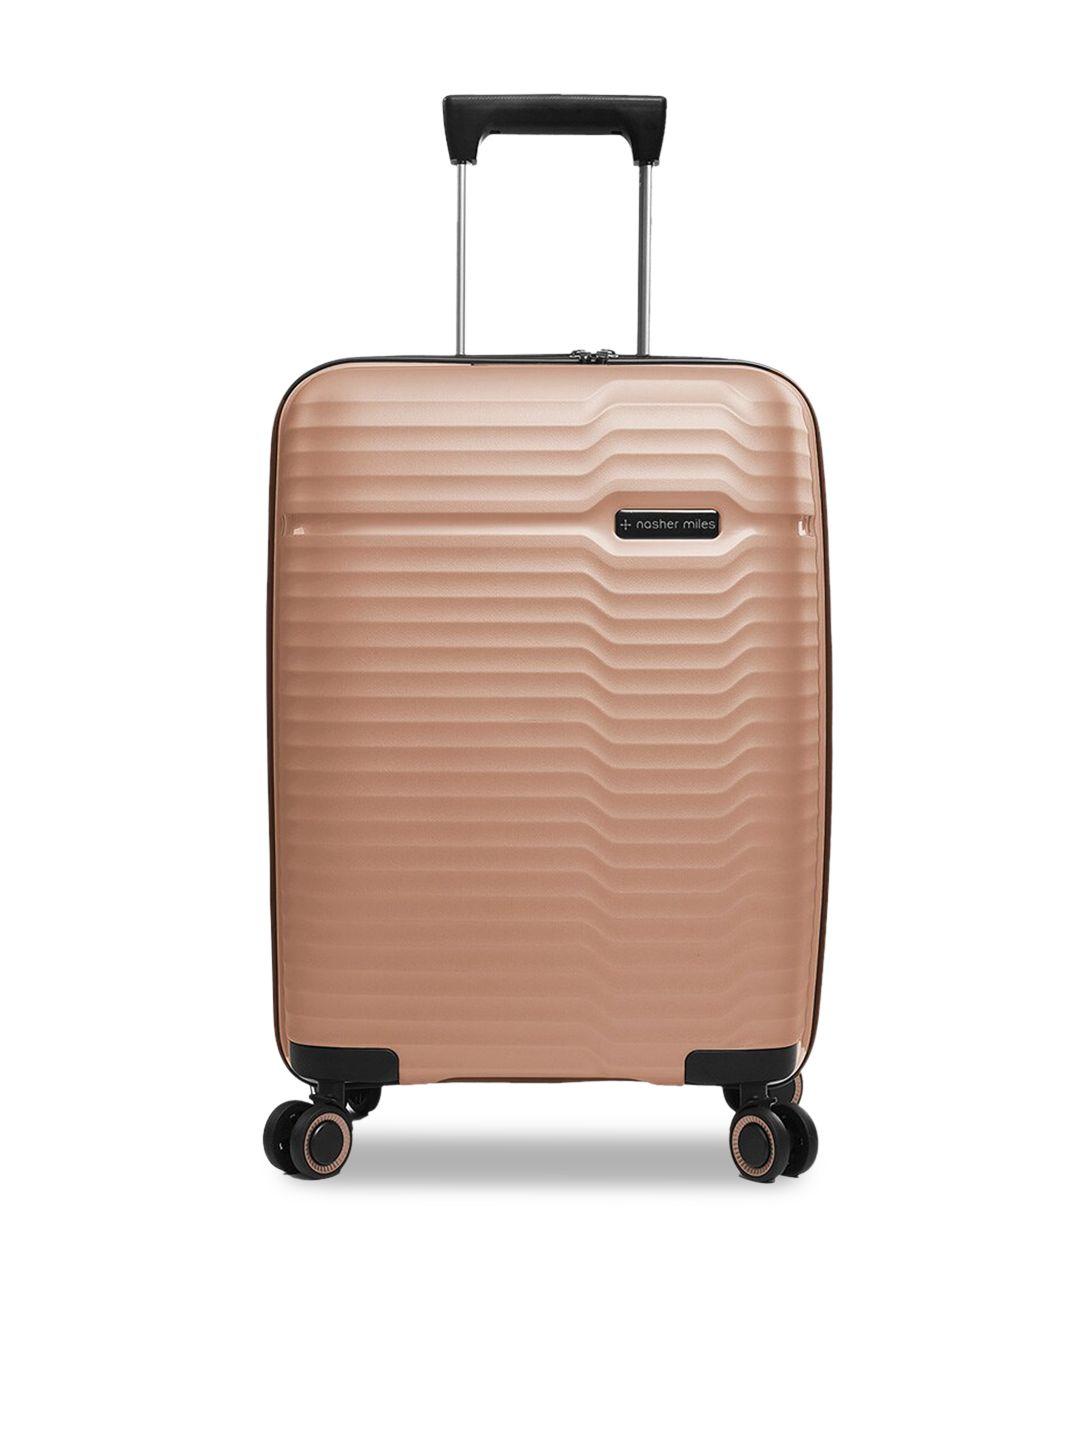 nasher miles gold colored polypropylene cabin luggage-55cm